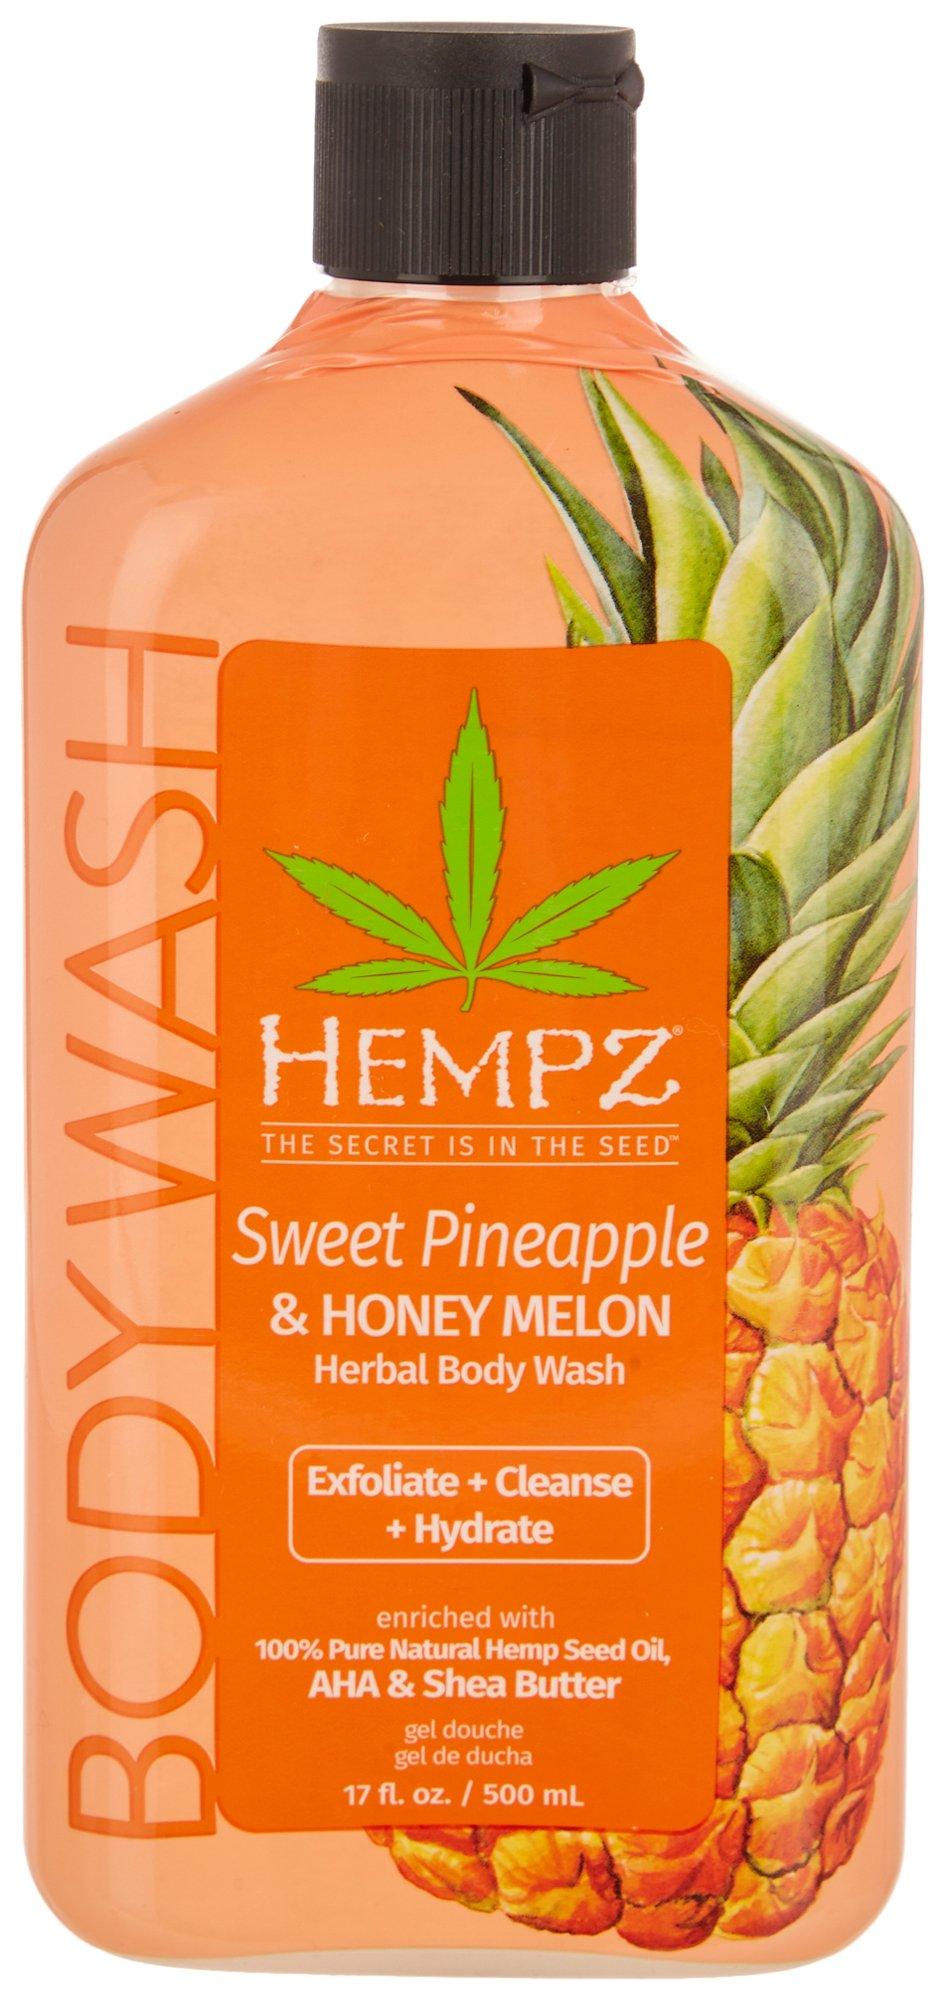 Hempz Sweet Pineapple Herbal Body Wash